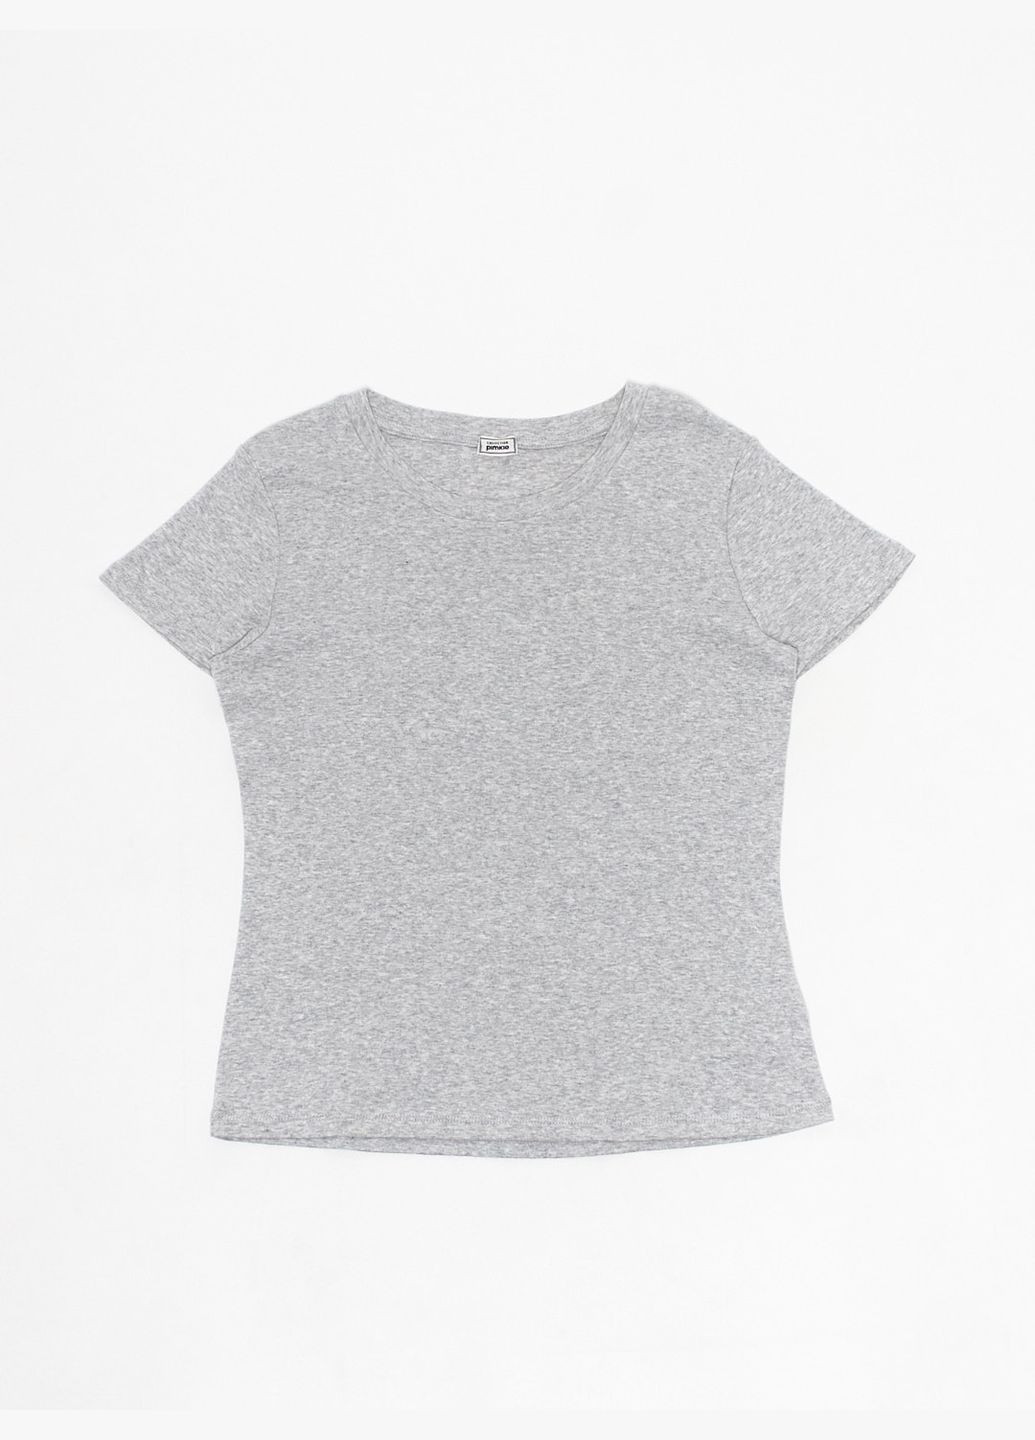 Серая футболка basic,серый меланж,pimkie No Brand